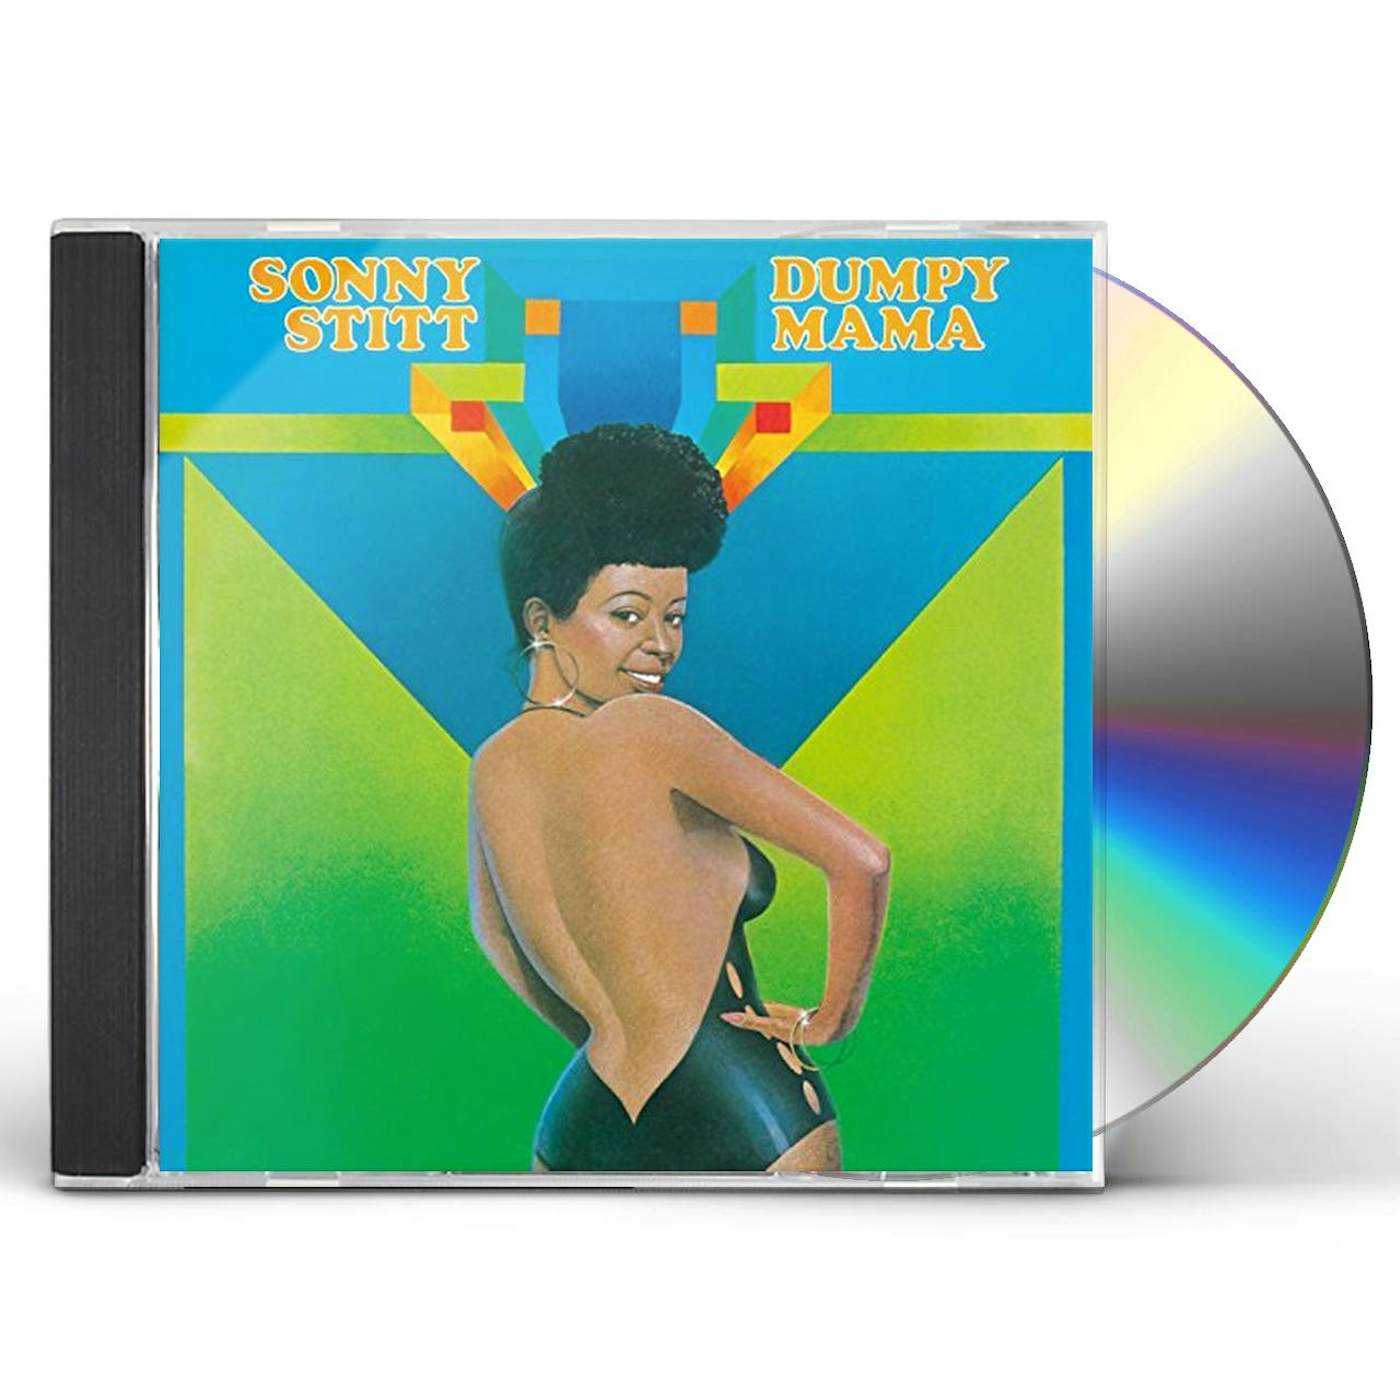 Sonny Stitt DUMPY MAMA CD